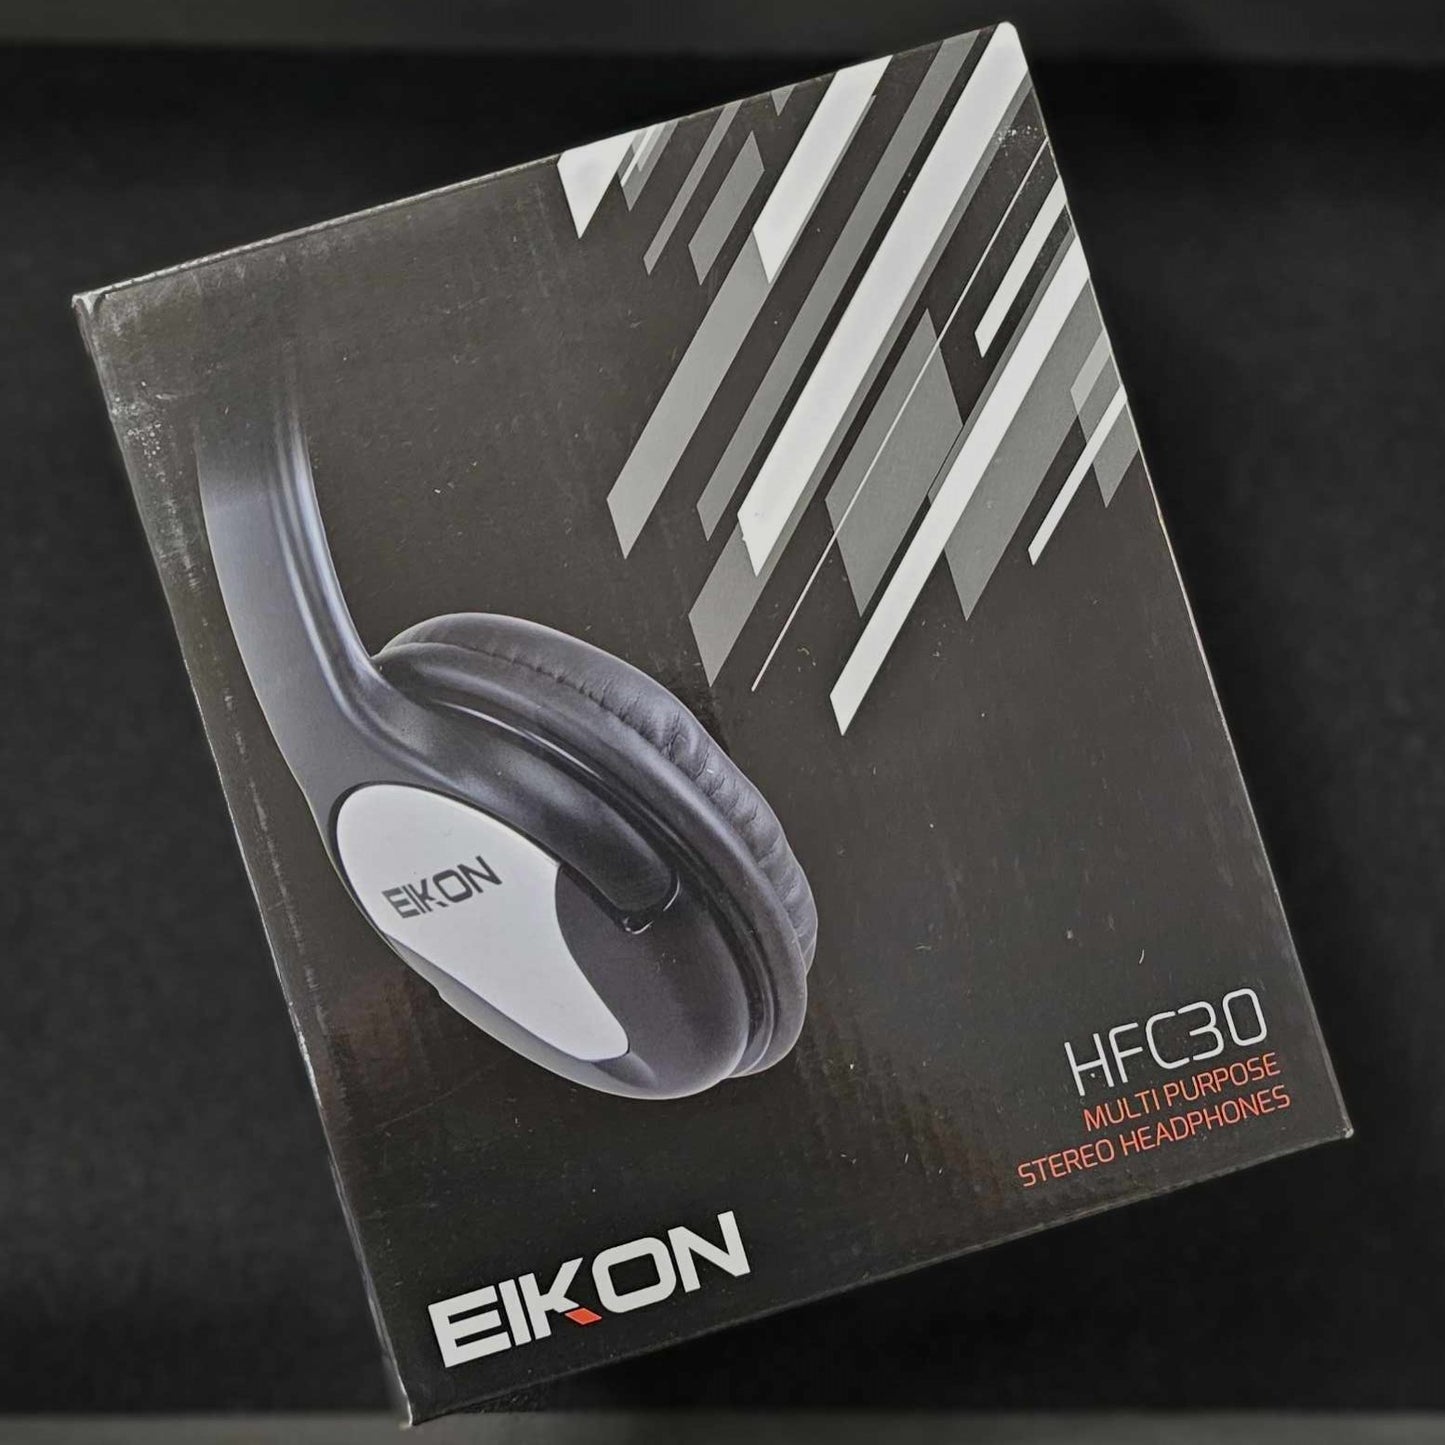 Eikon HFC30 Multi Purpose Stereo Headphones